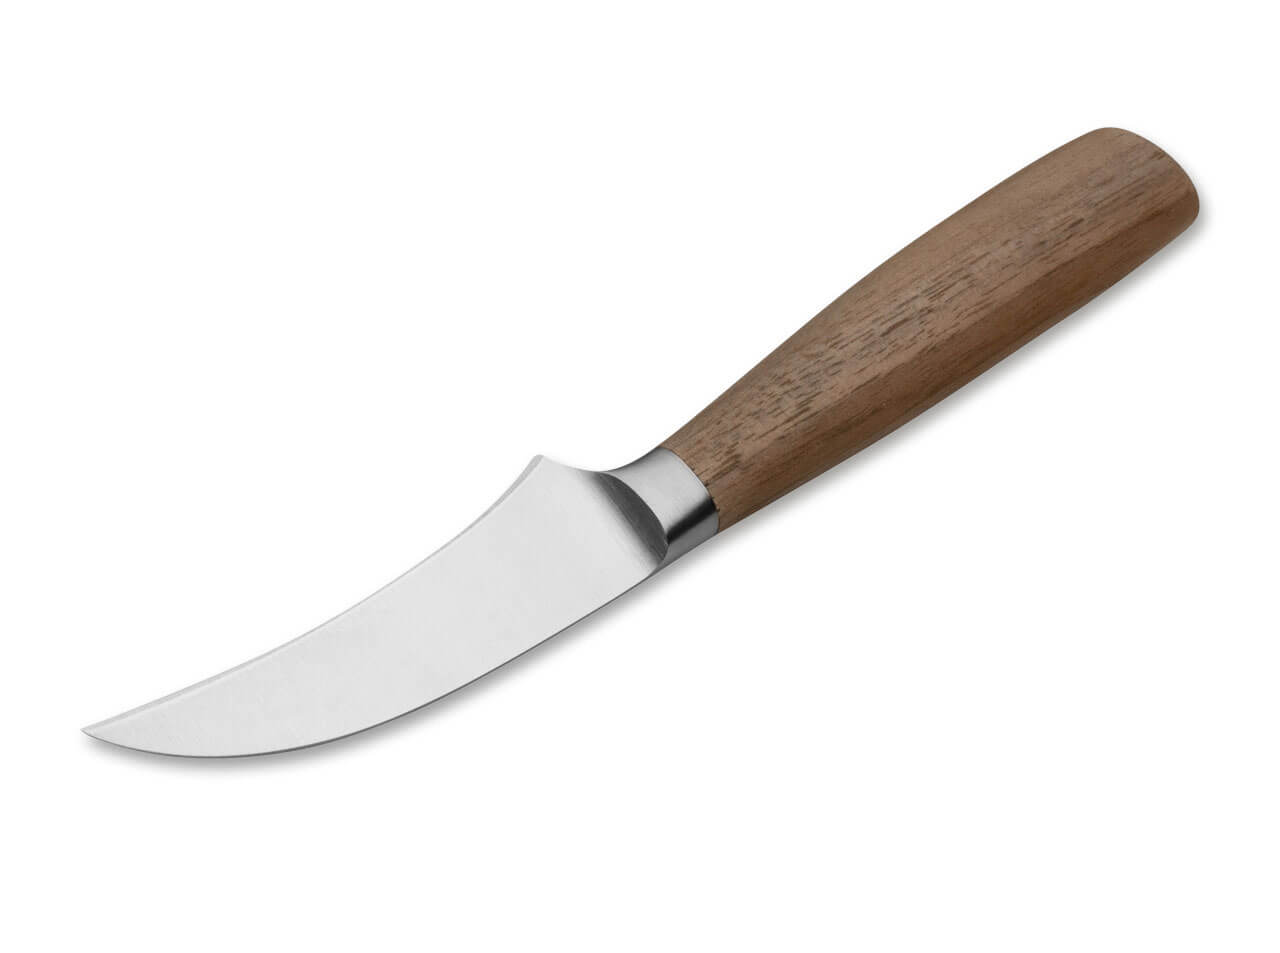 https://www.bokerusa.com/media/image/10/9a/2f/boeker-manufaktur-solingen-core-peeling-knife-130725_2.jpg